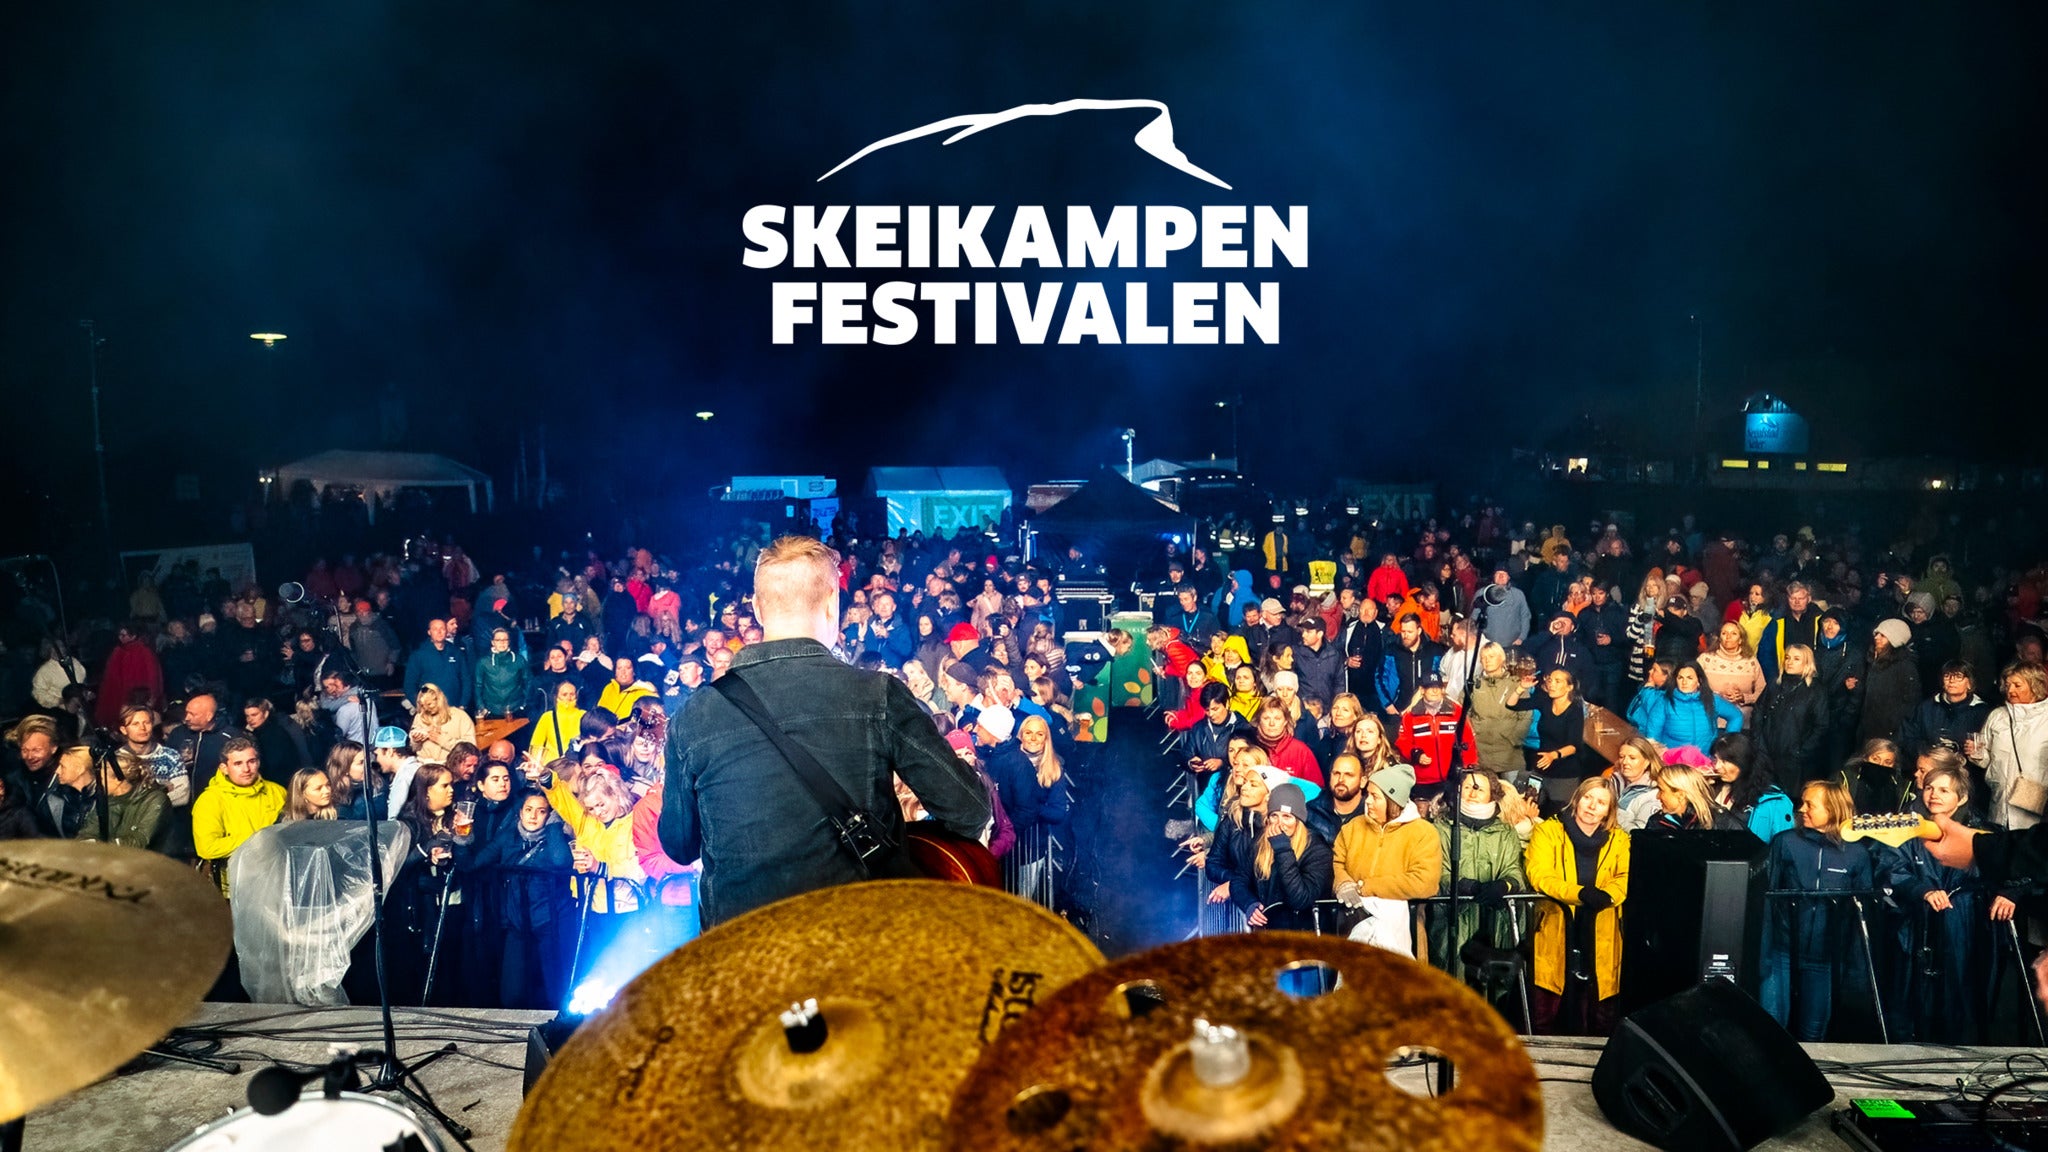 Skeikampenfestivalen presale information on freepresalepasswords.com